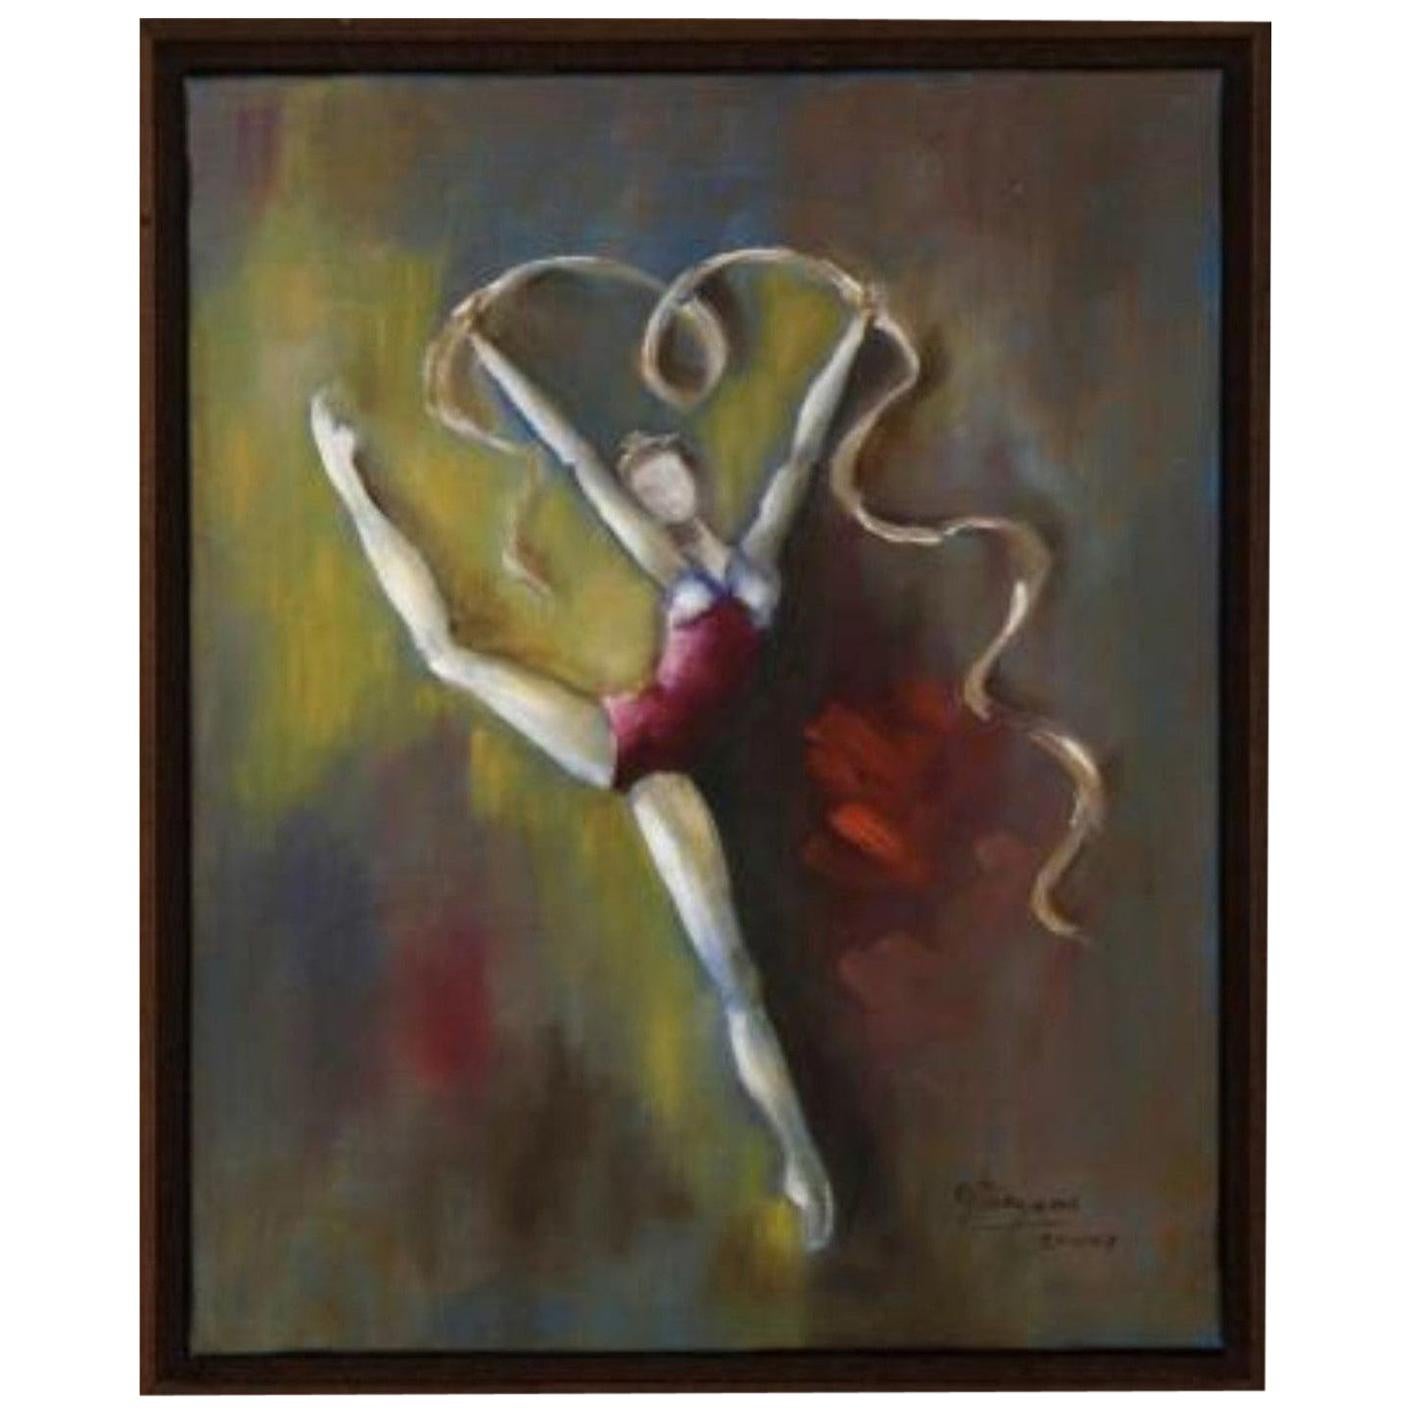 Ballerine moderniste, huile sur toile "Bailarina" par Olga Pargana, datée de 2002, signée en vente